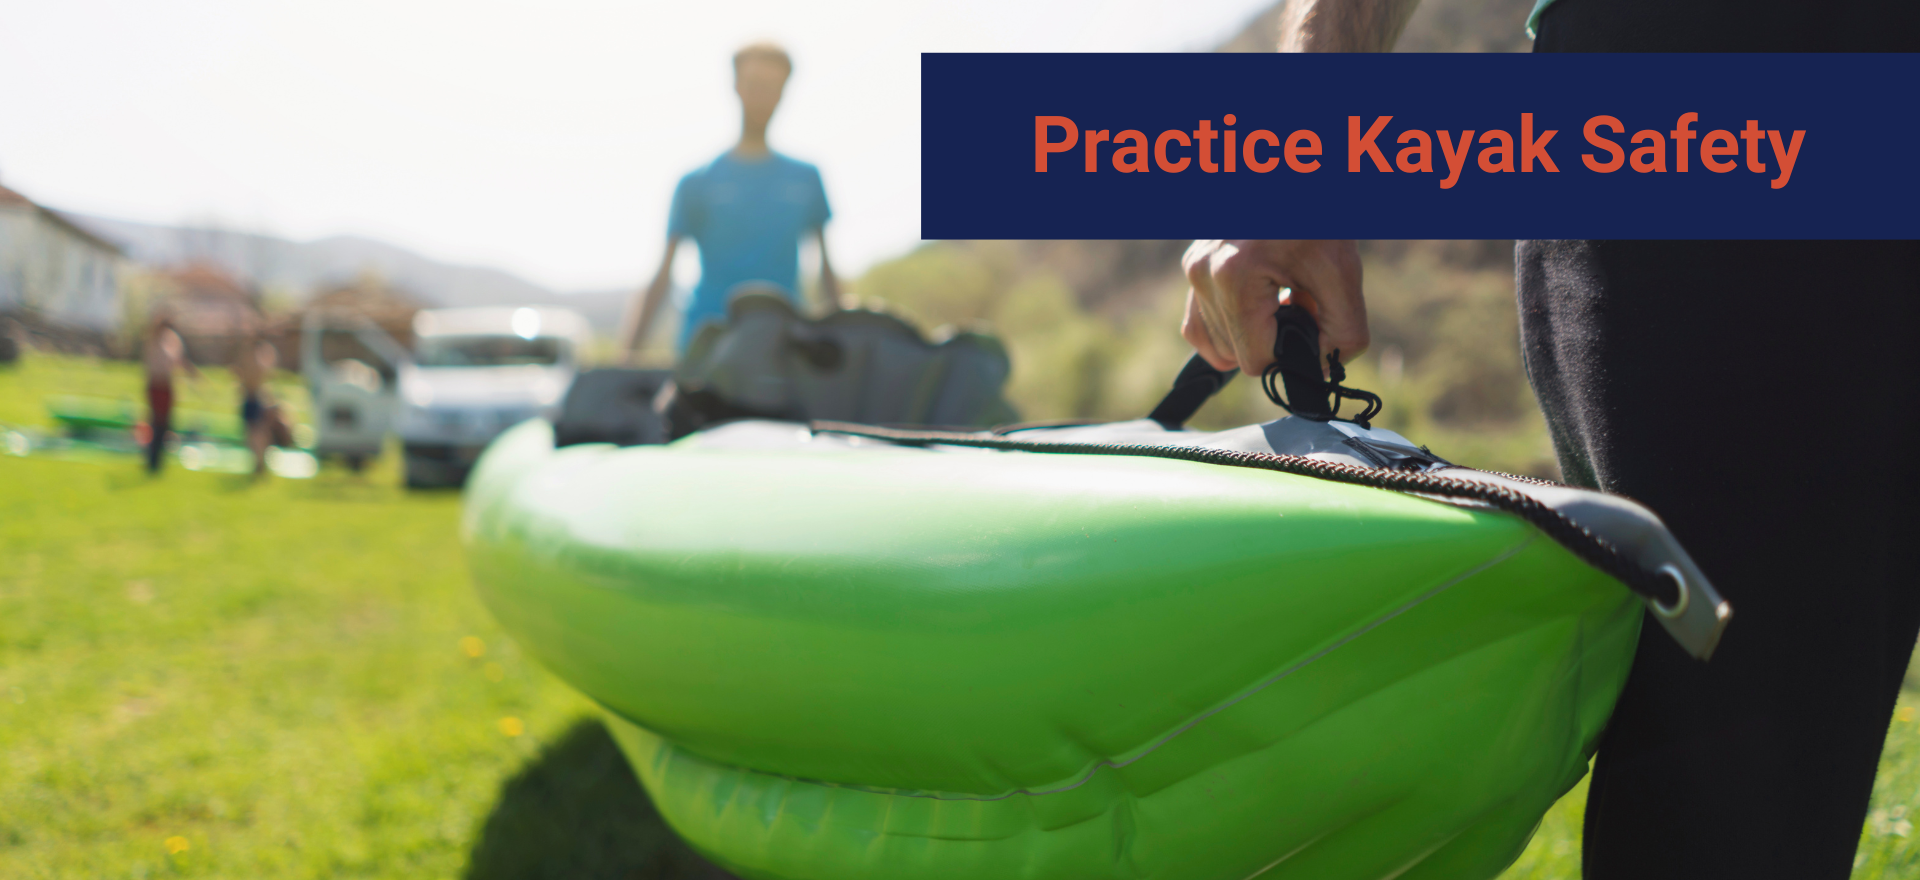 Practice Kayak Safety